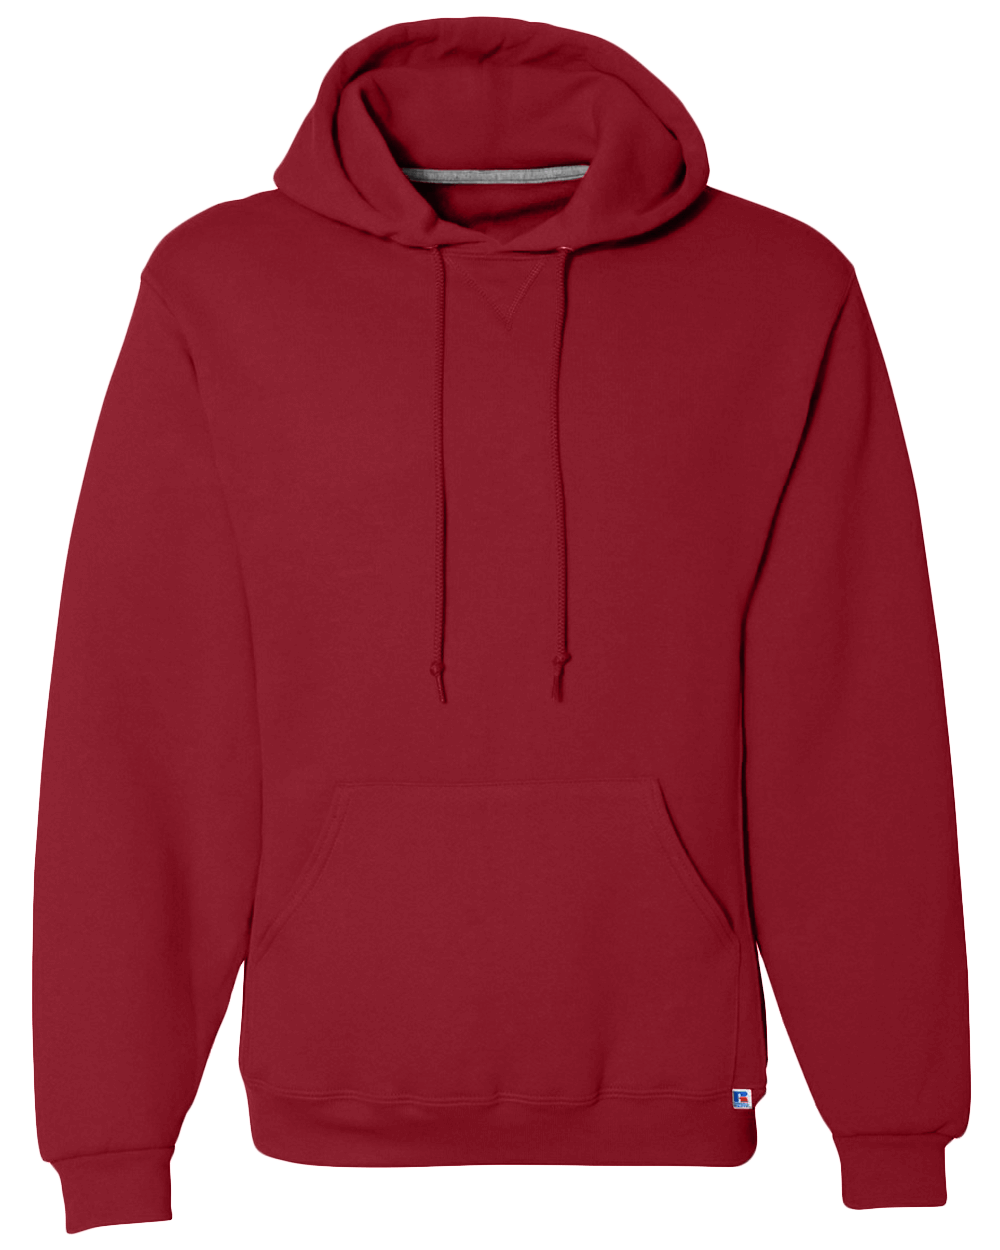 695HBM Dri-Power Fleece Pullover Sweatshirt - Russell Athletic - CustomCat